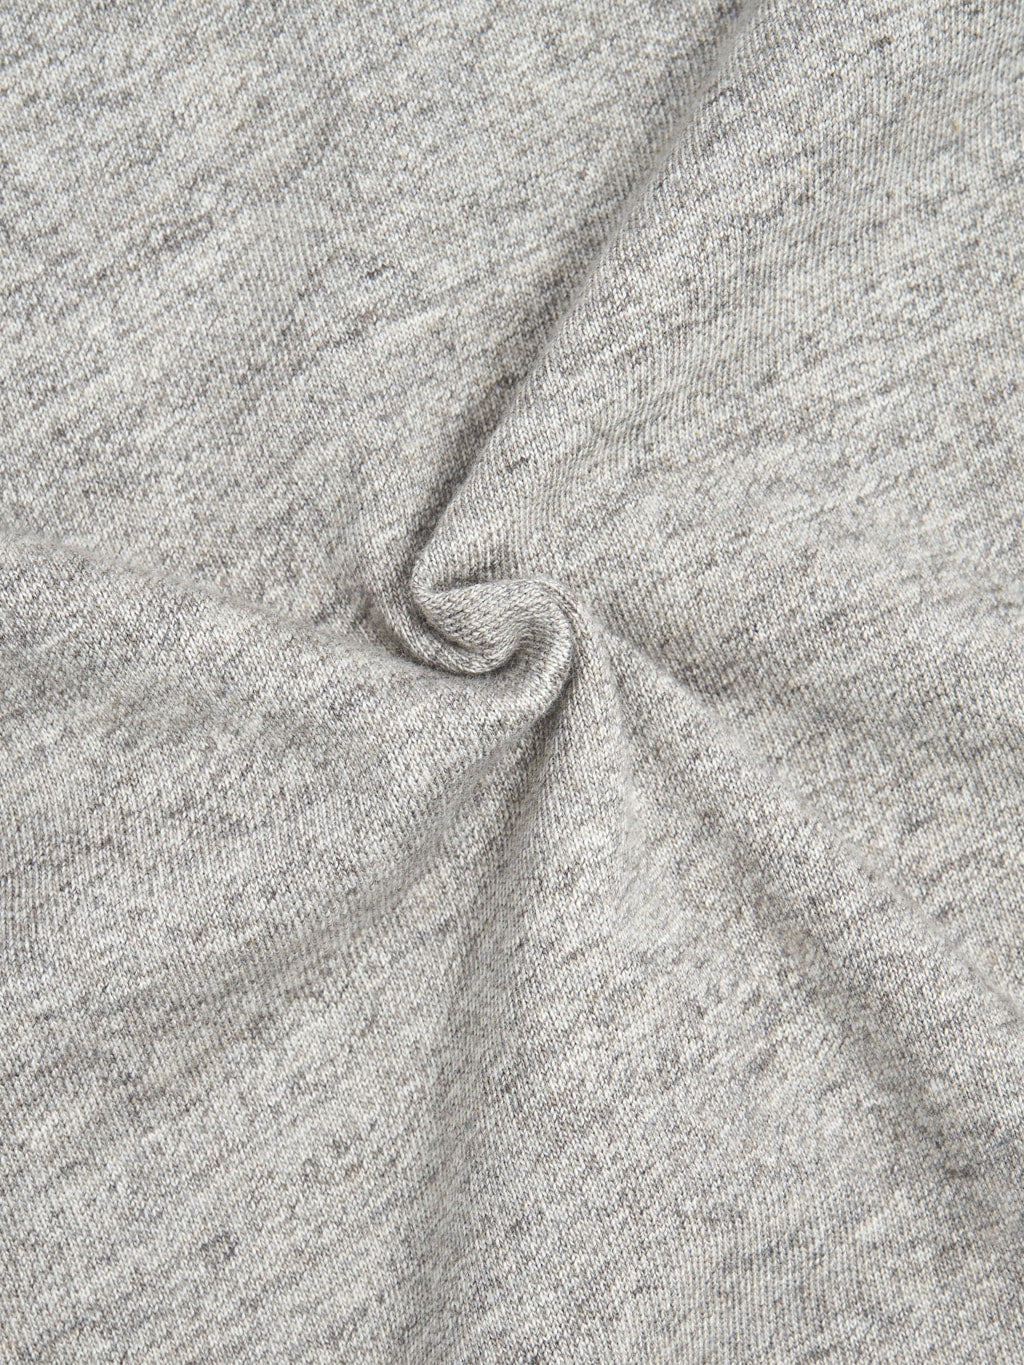 UES Ramayana crewneck pocket TShirt grey  texture